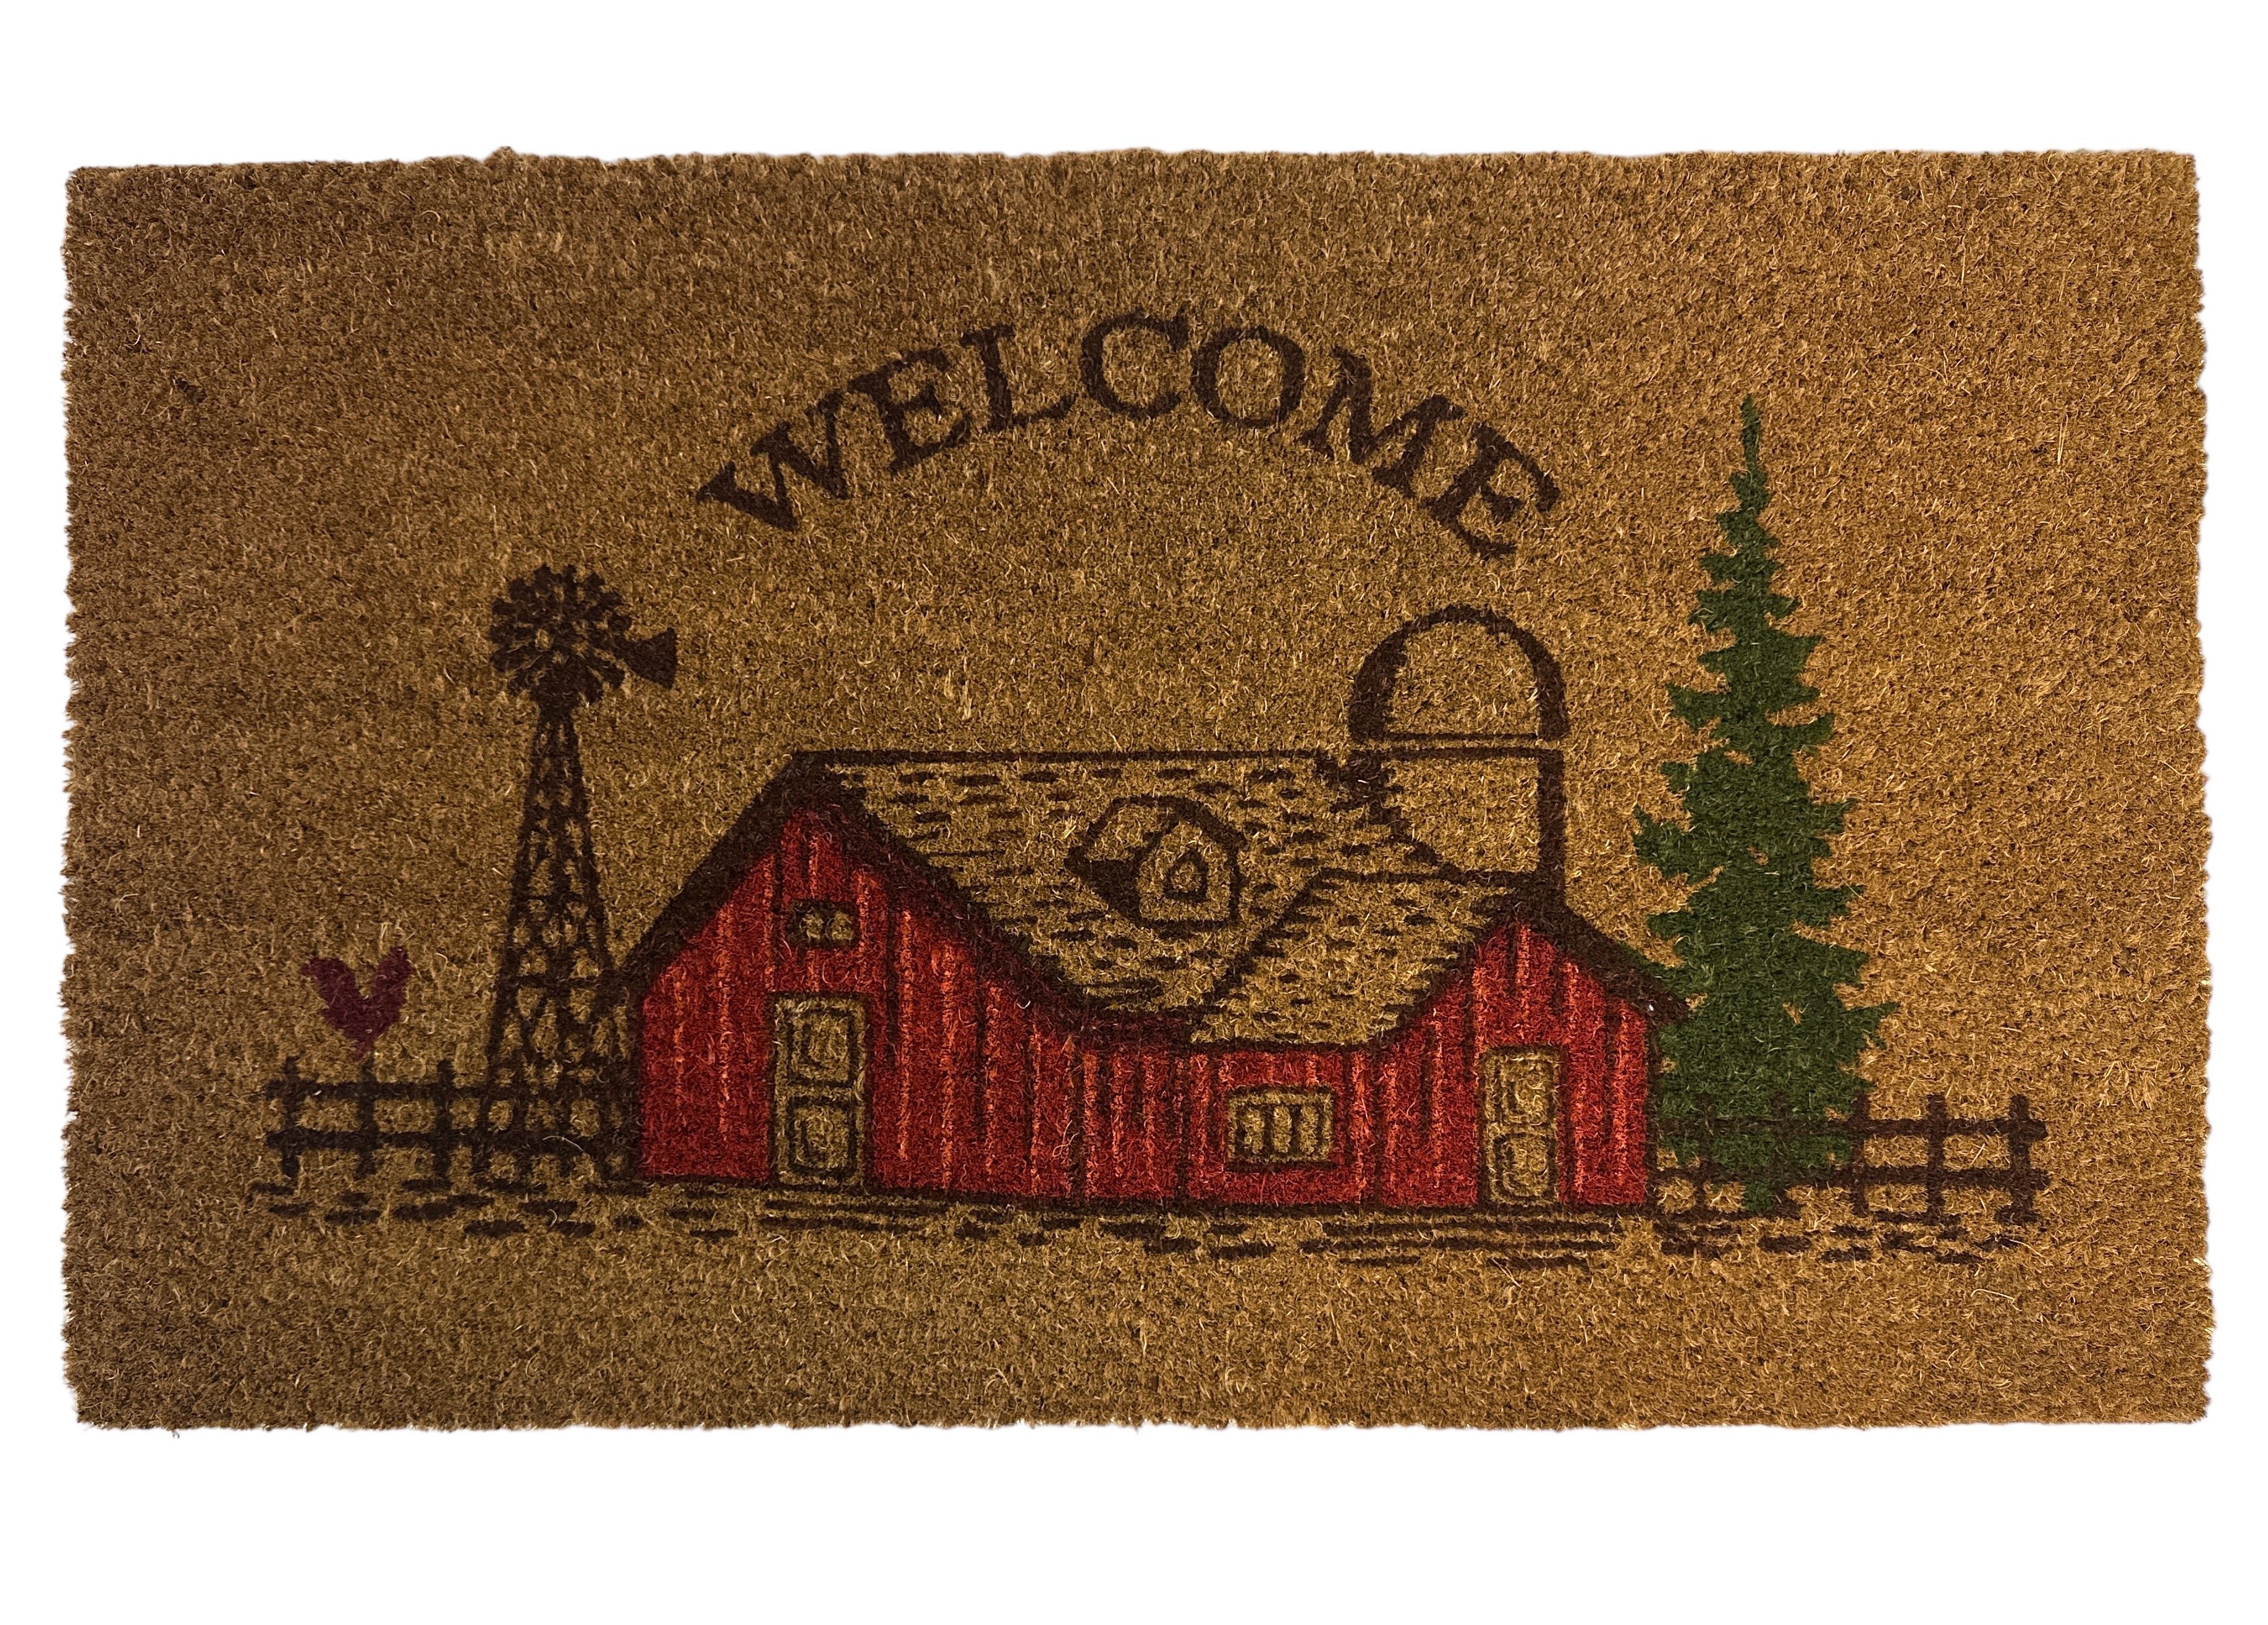 Barnyard Designs 'Welcome' Doormat Welcome Mat for Outdoors, Large